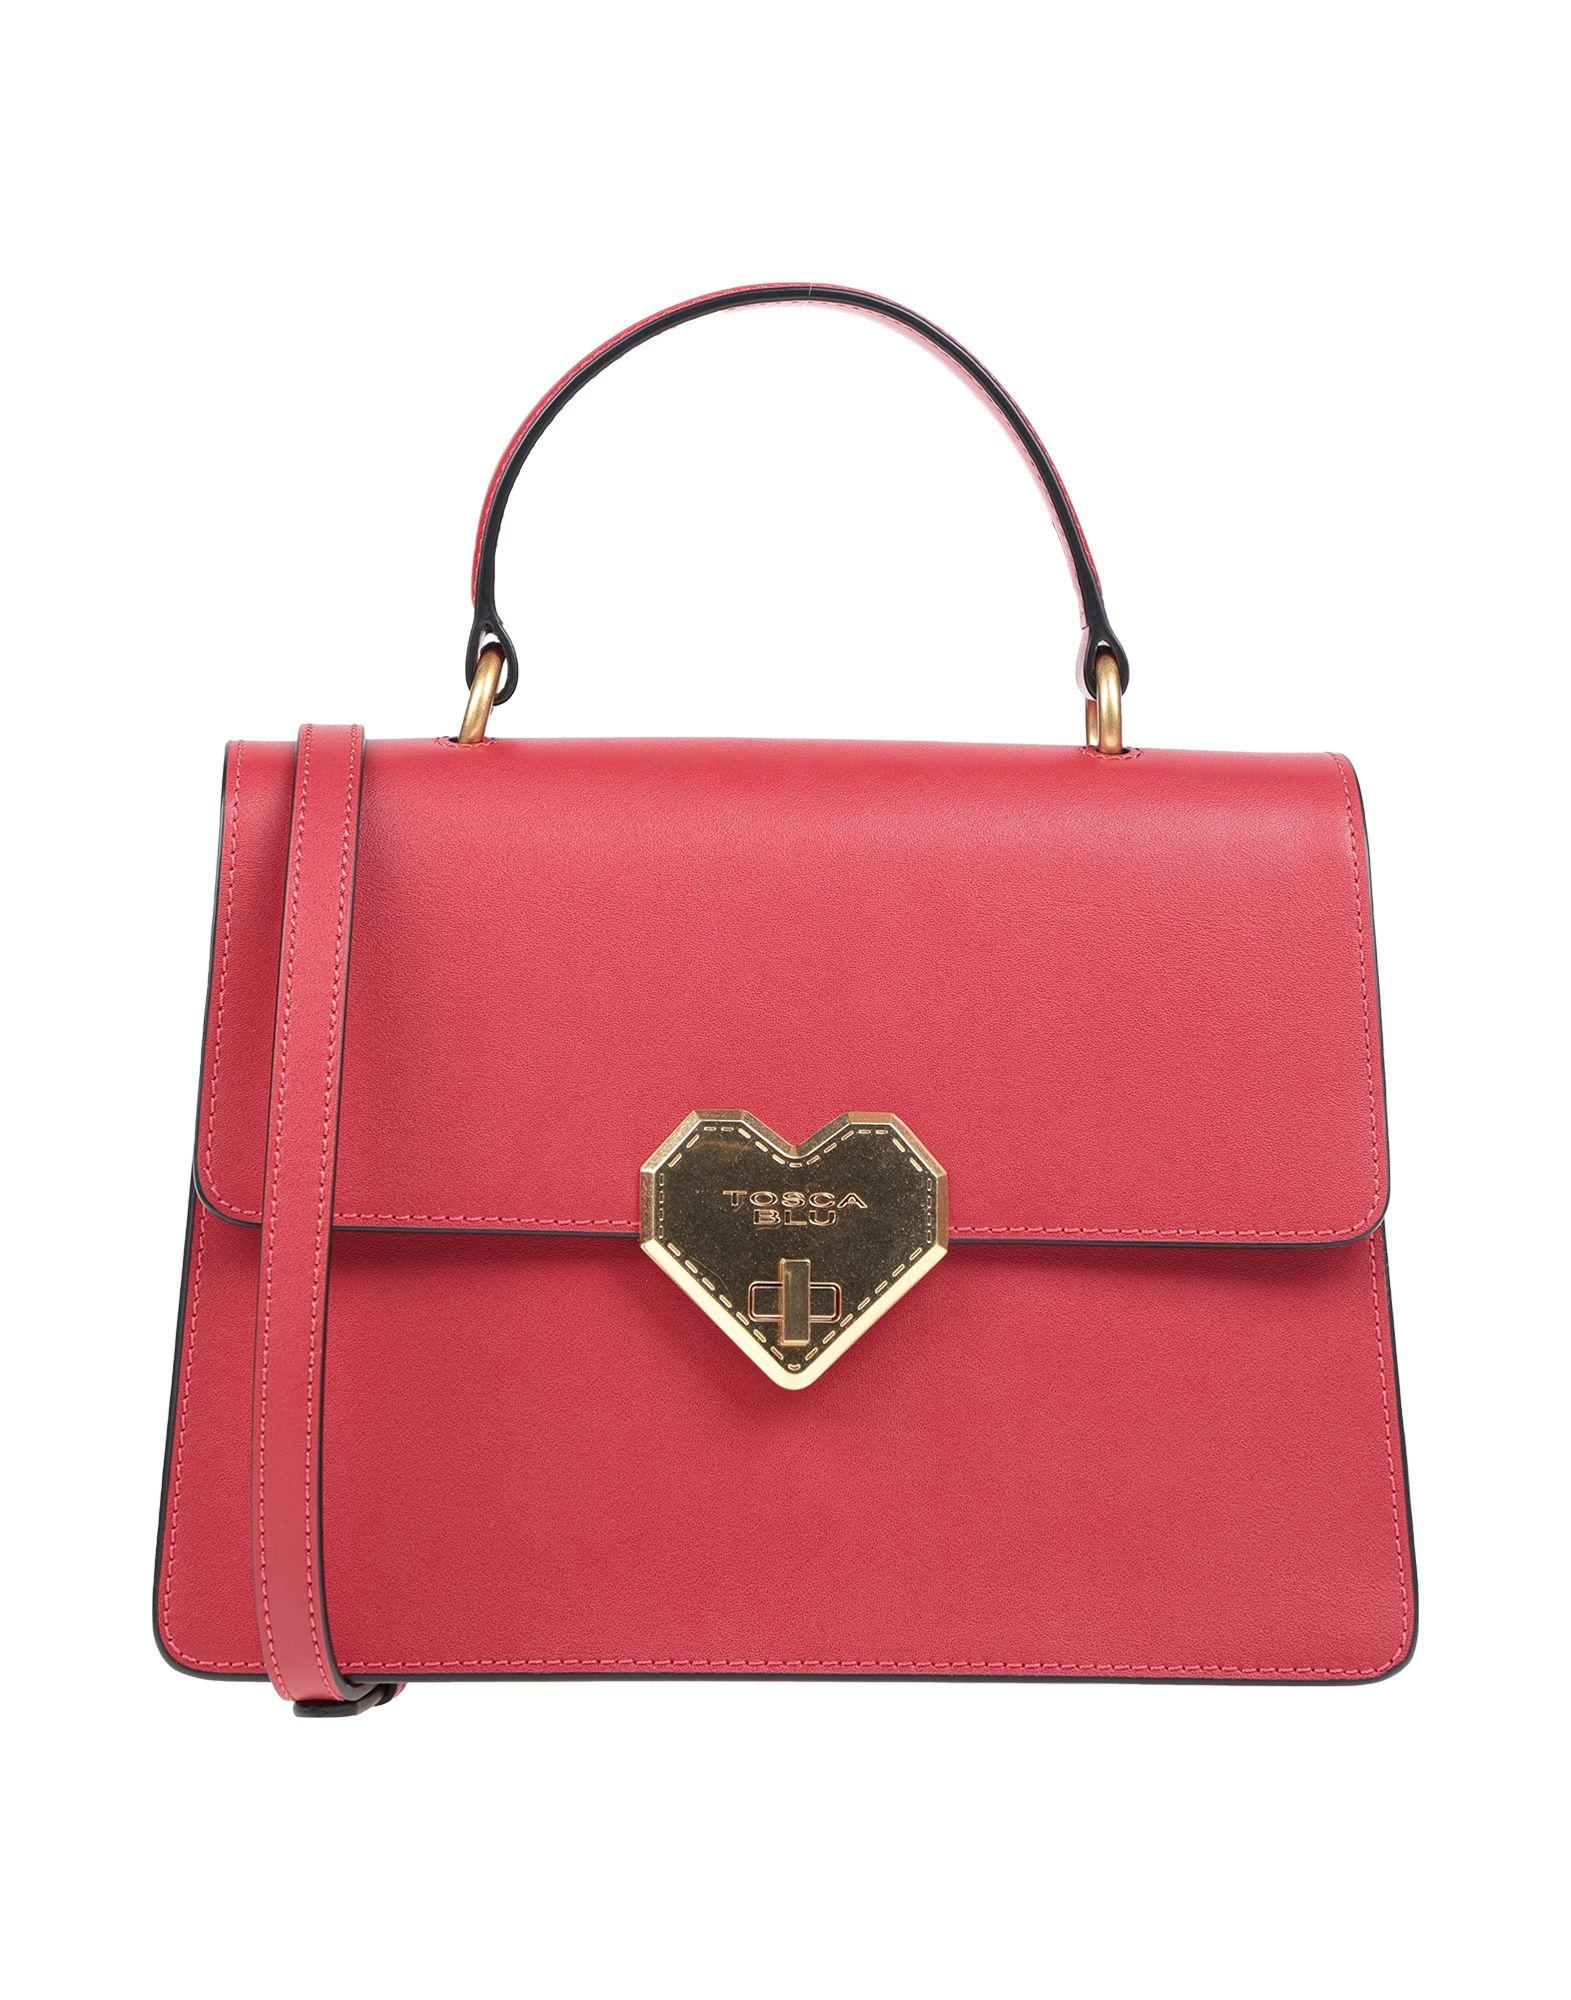 Tosca Blu Handbag in Red - Lyst